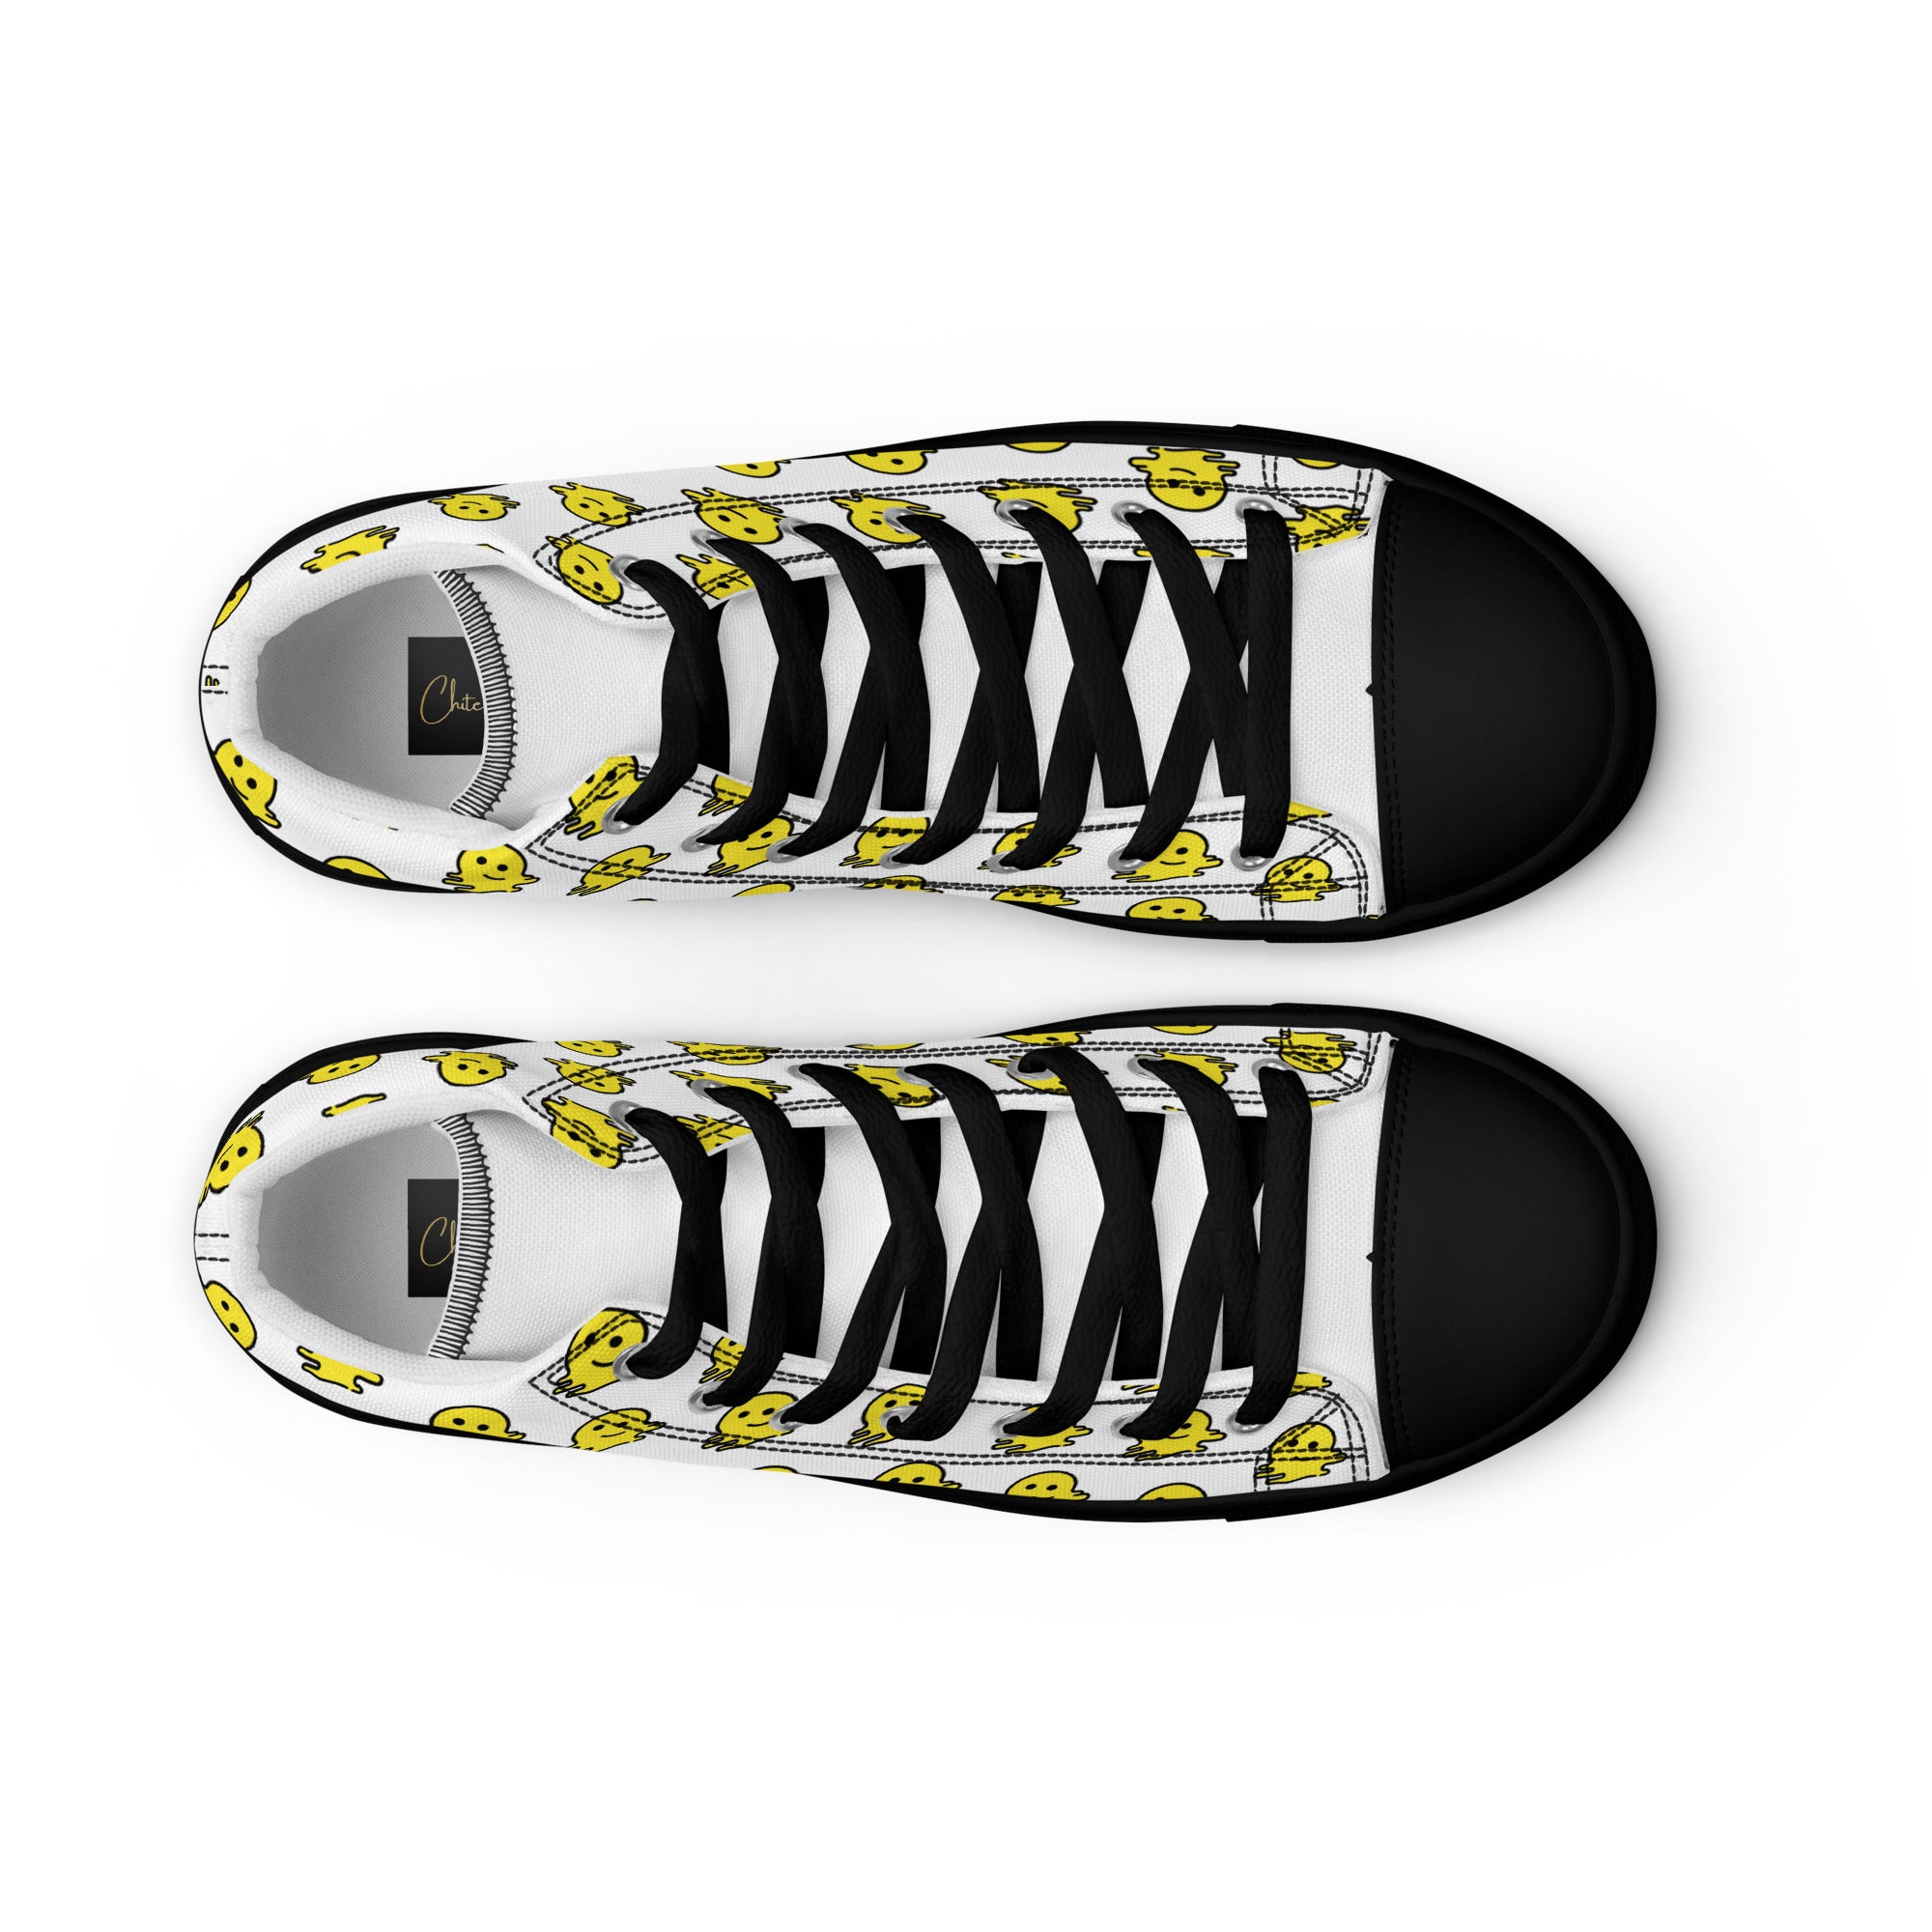 Chitelli's Melting Face Emoji Men's High Top Sneakers